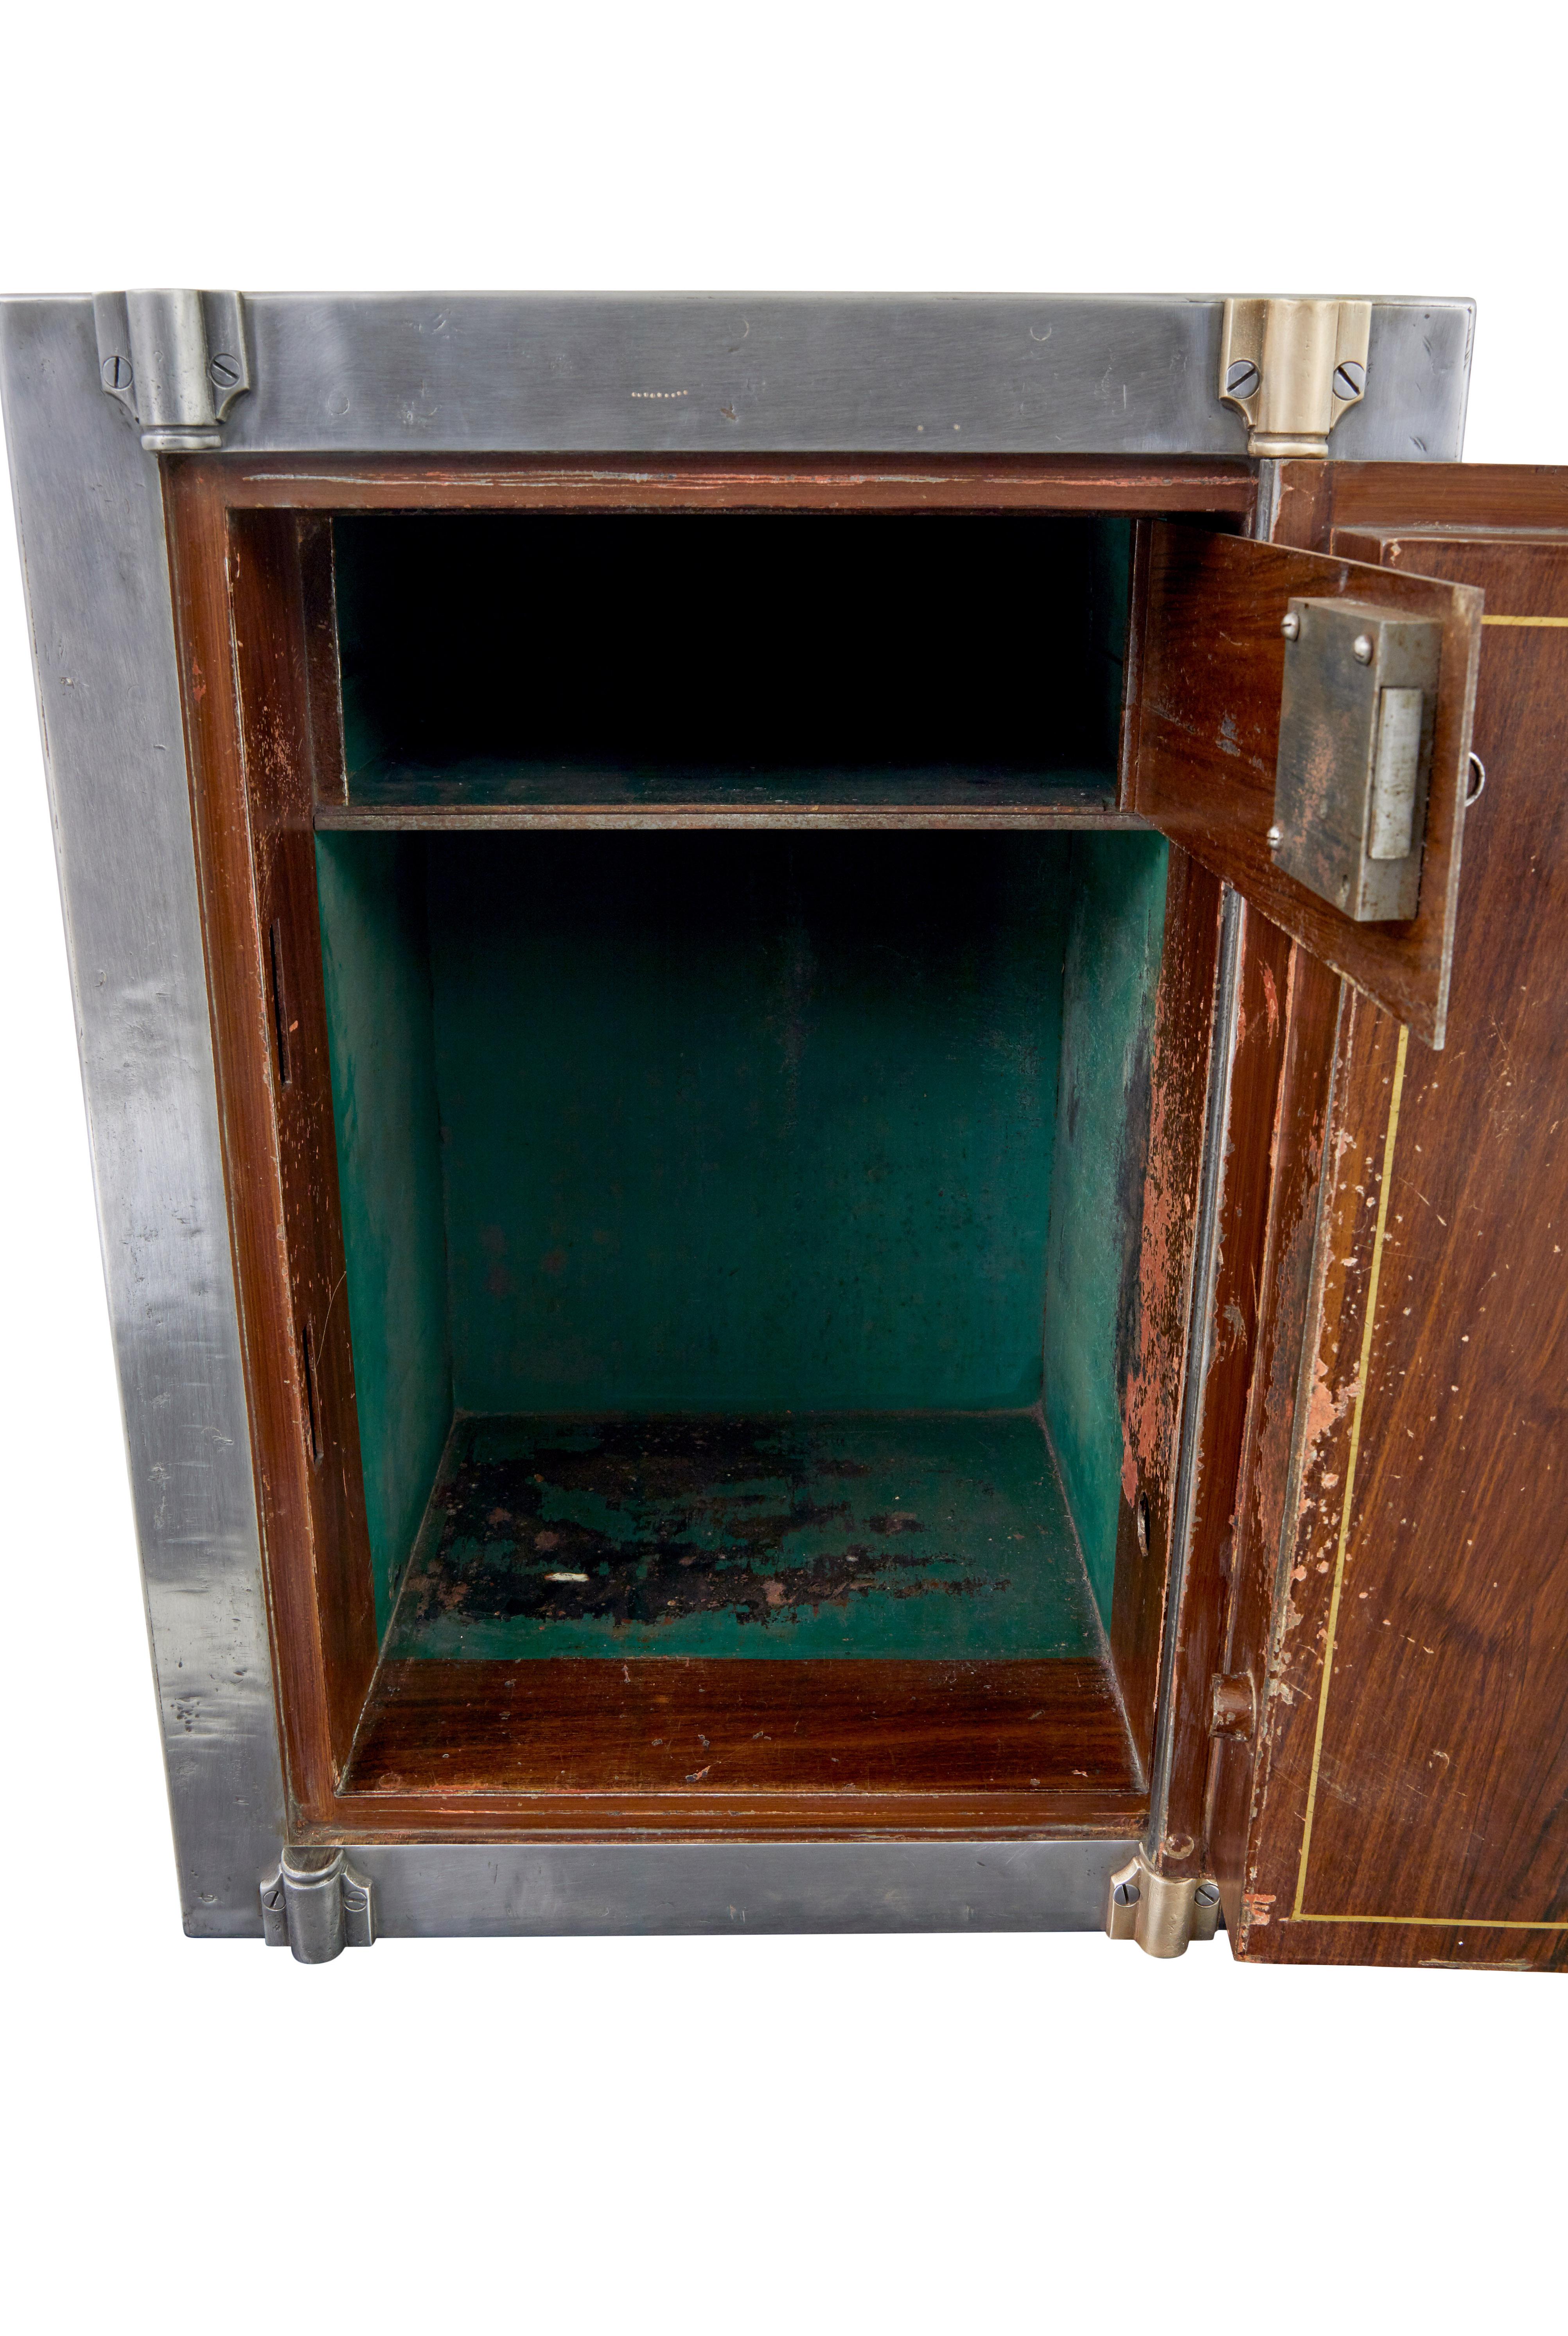 19th century Danish polished steel safe on cabinet For Sale 1